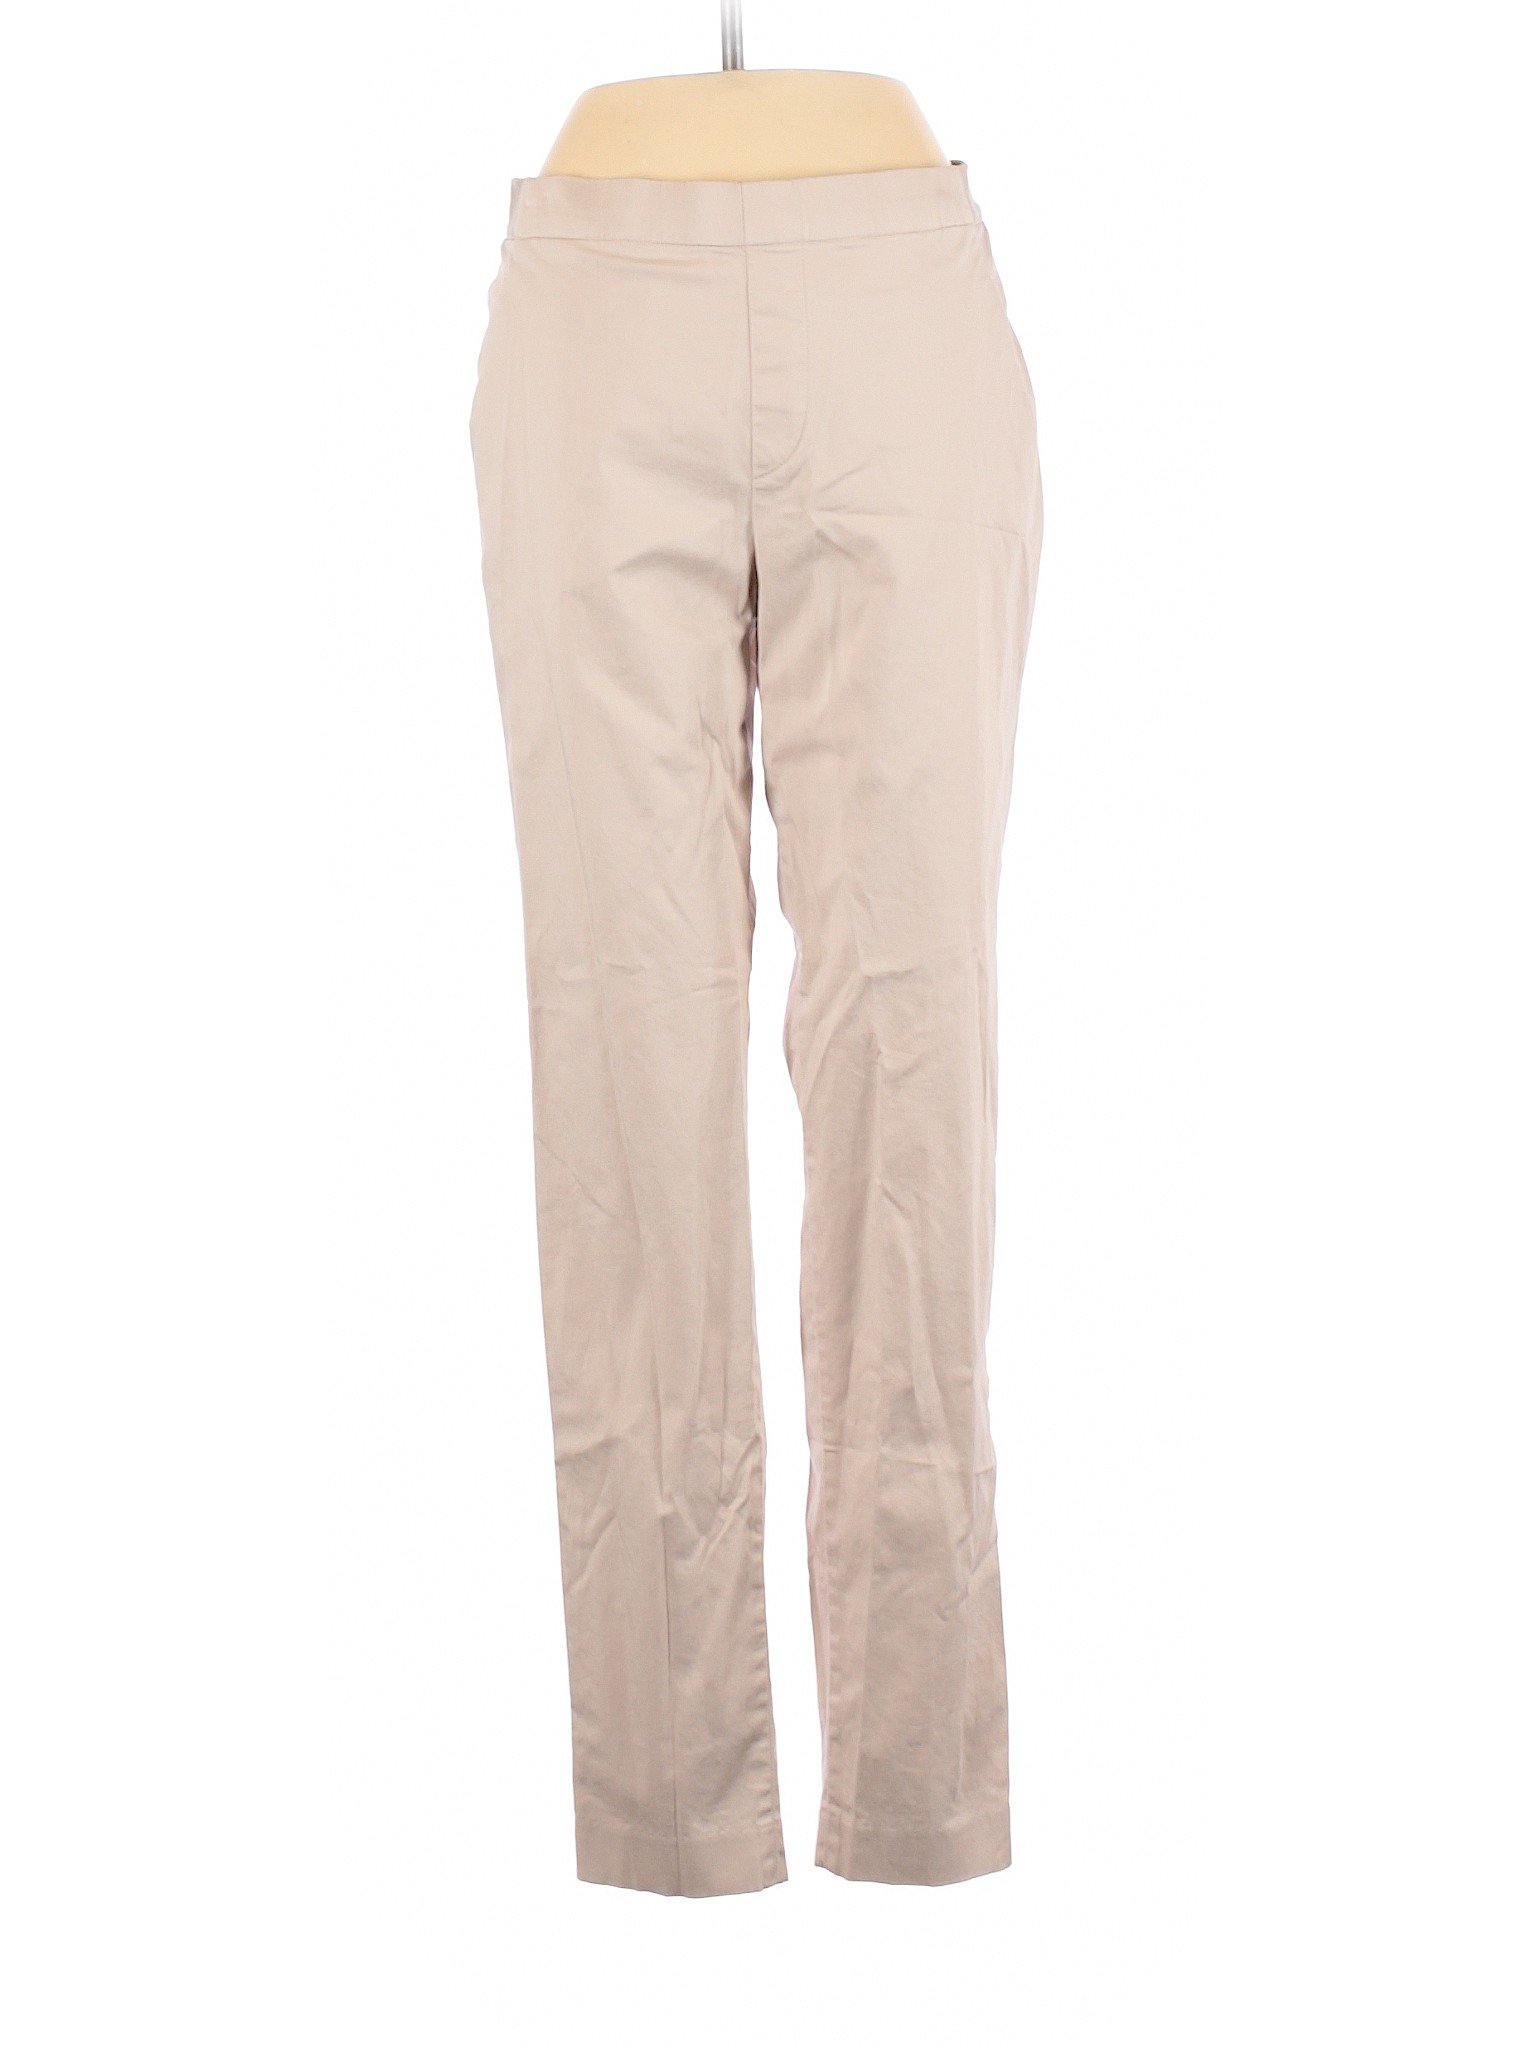 Uniqlo Women Brown Casual Pants XS | eBay